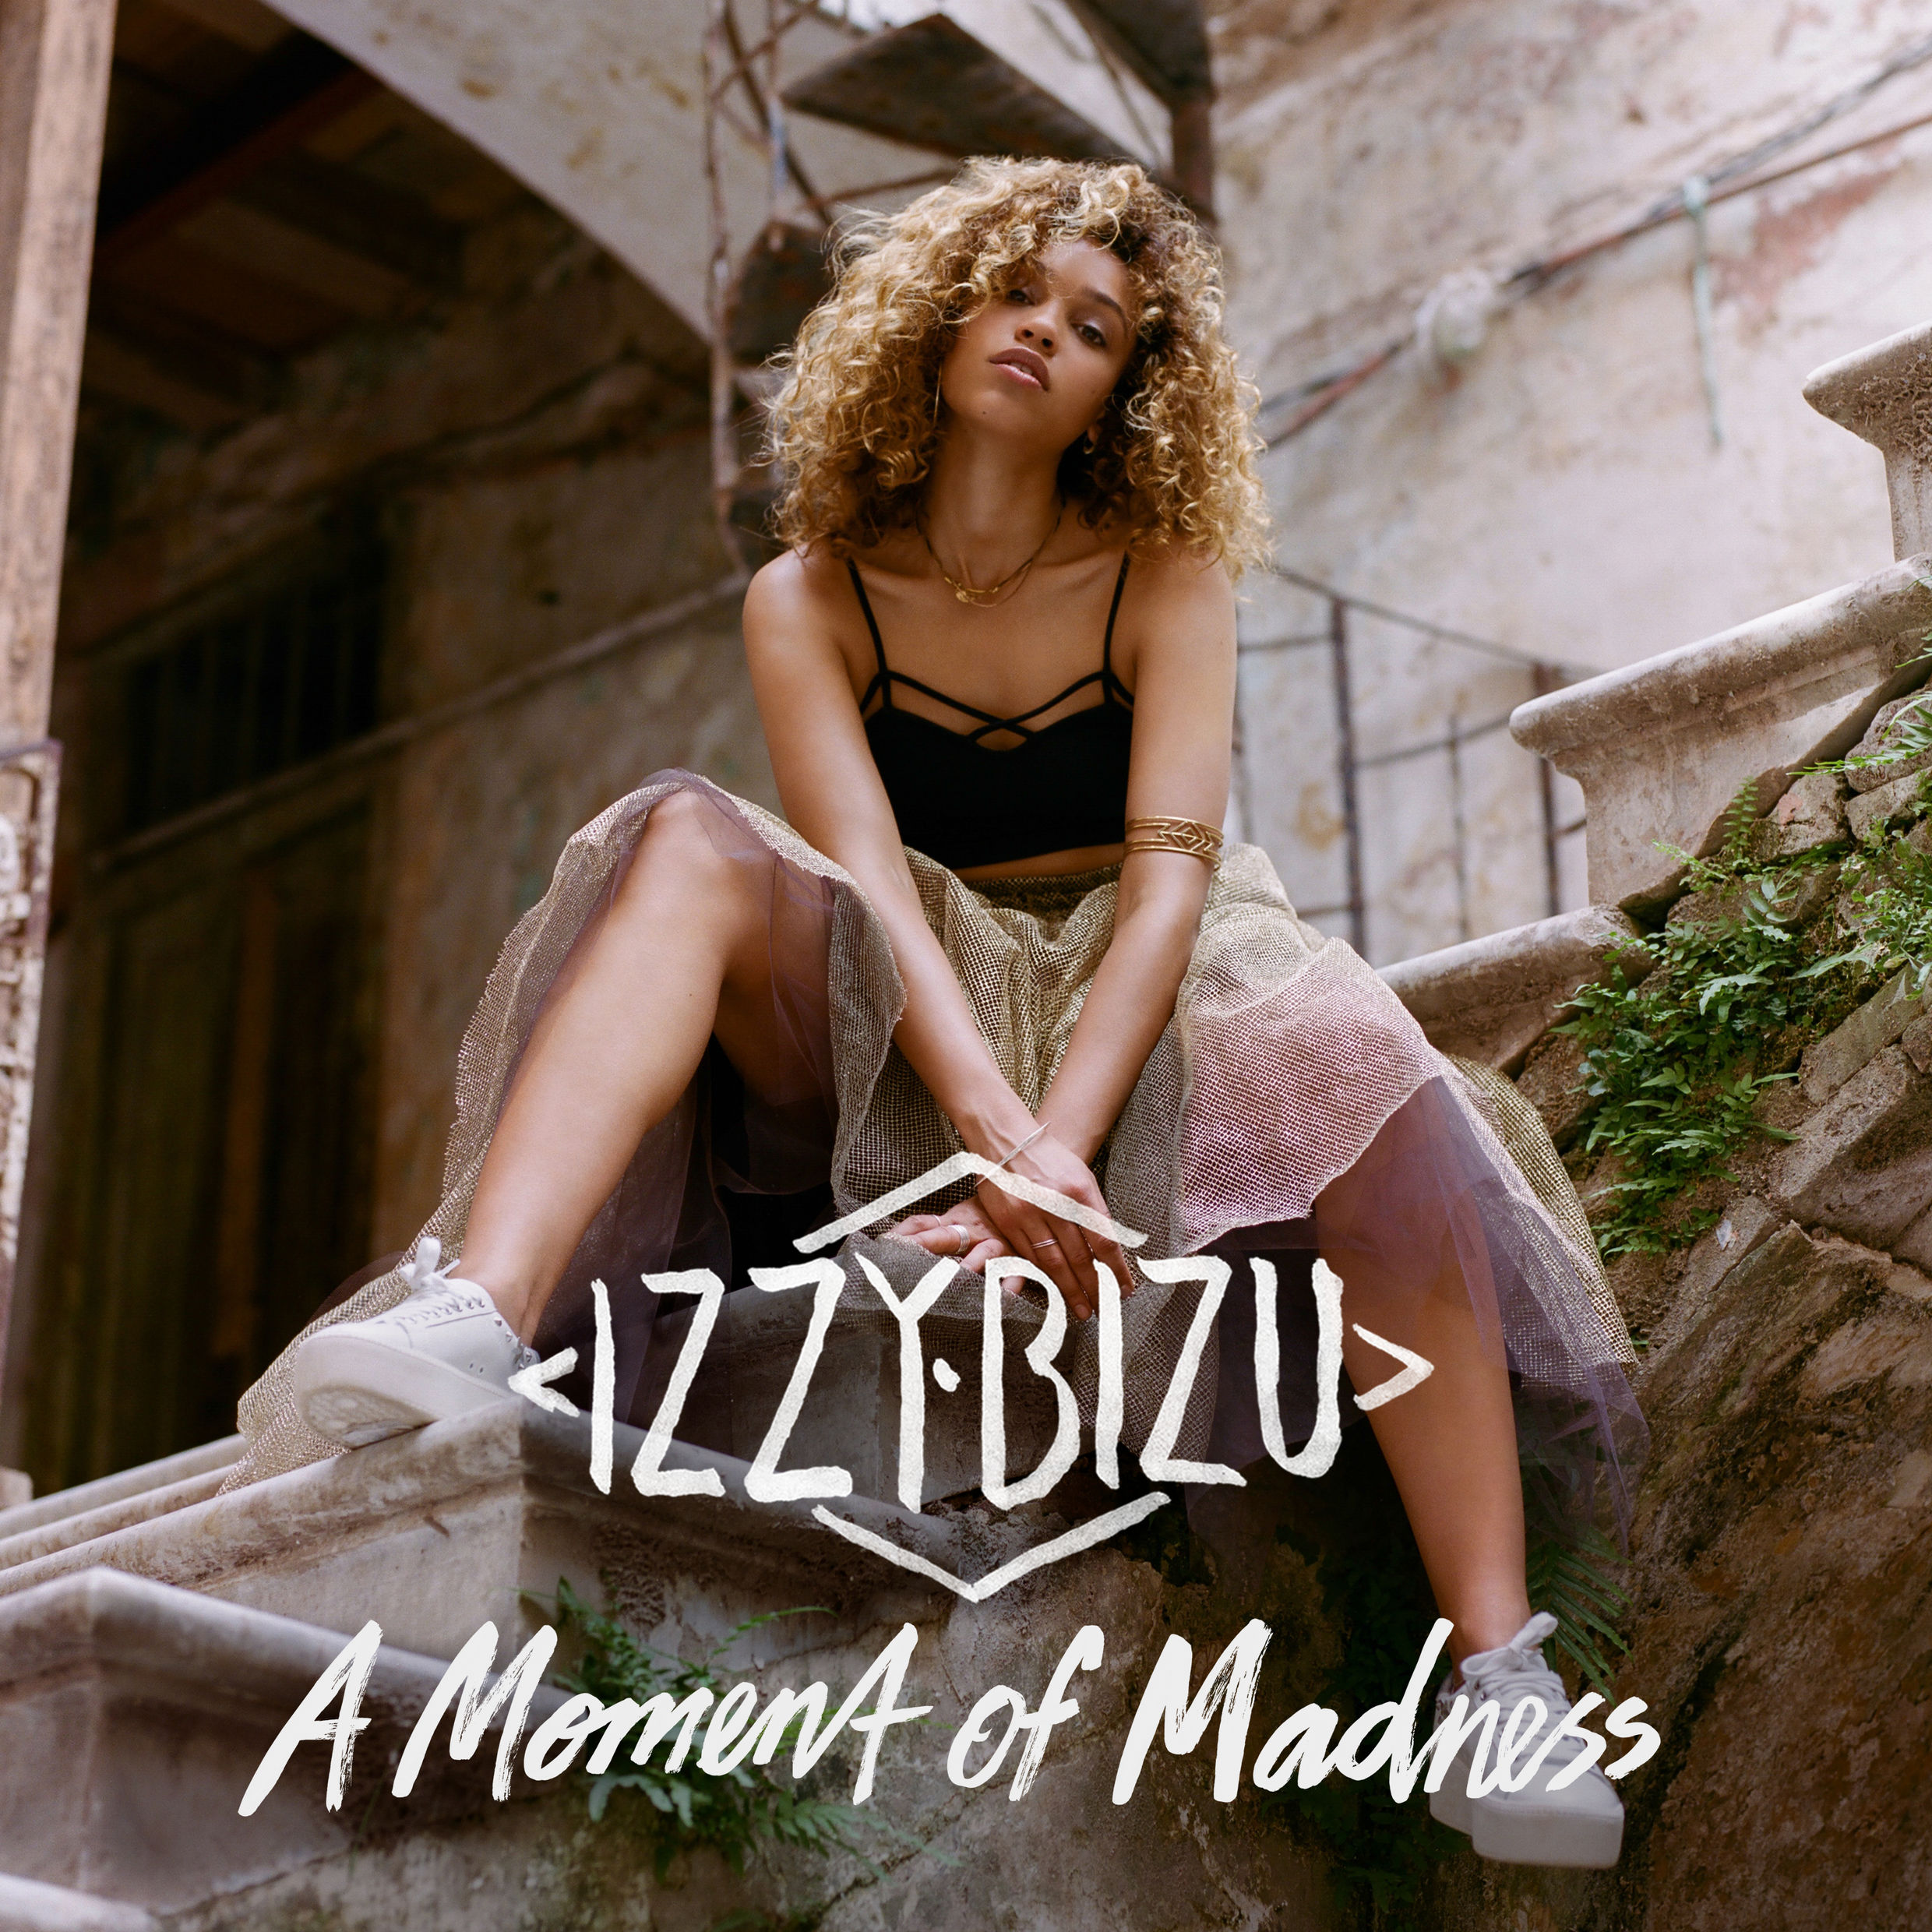 izzy-bizu-a-moment-of-madness-2016-2480x2480